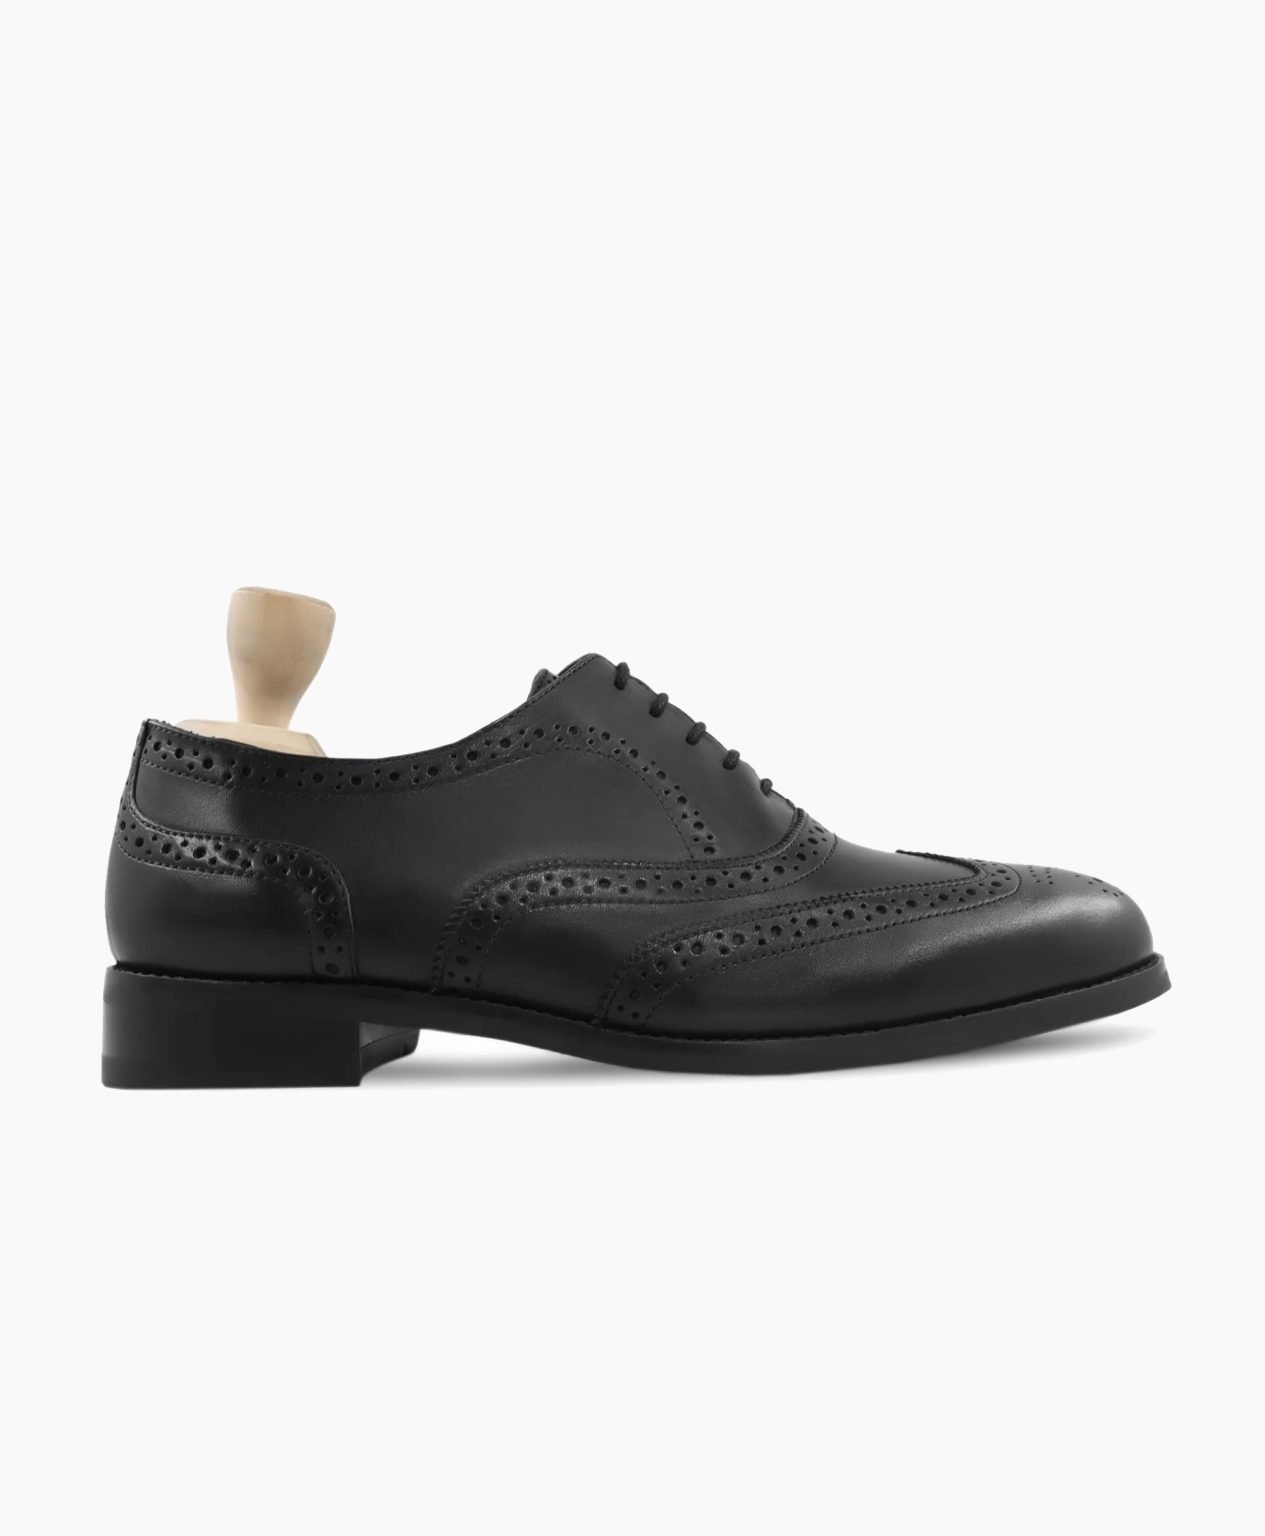 huntingdon-oxford-black-leather-shoes-image201